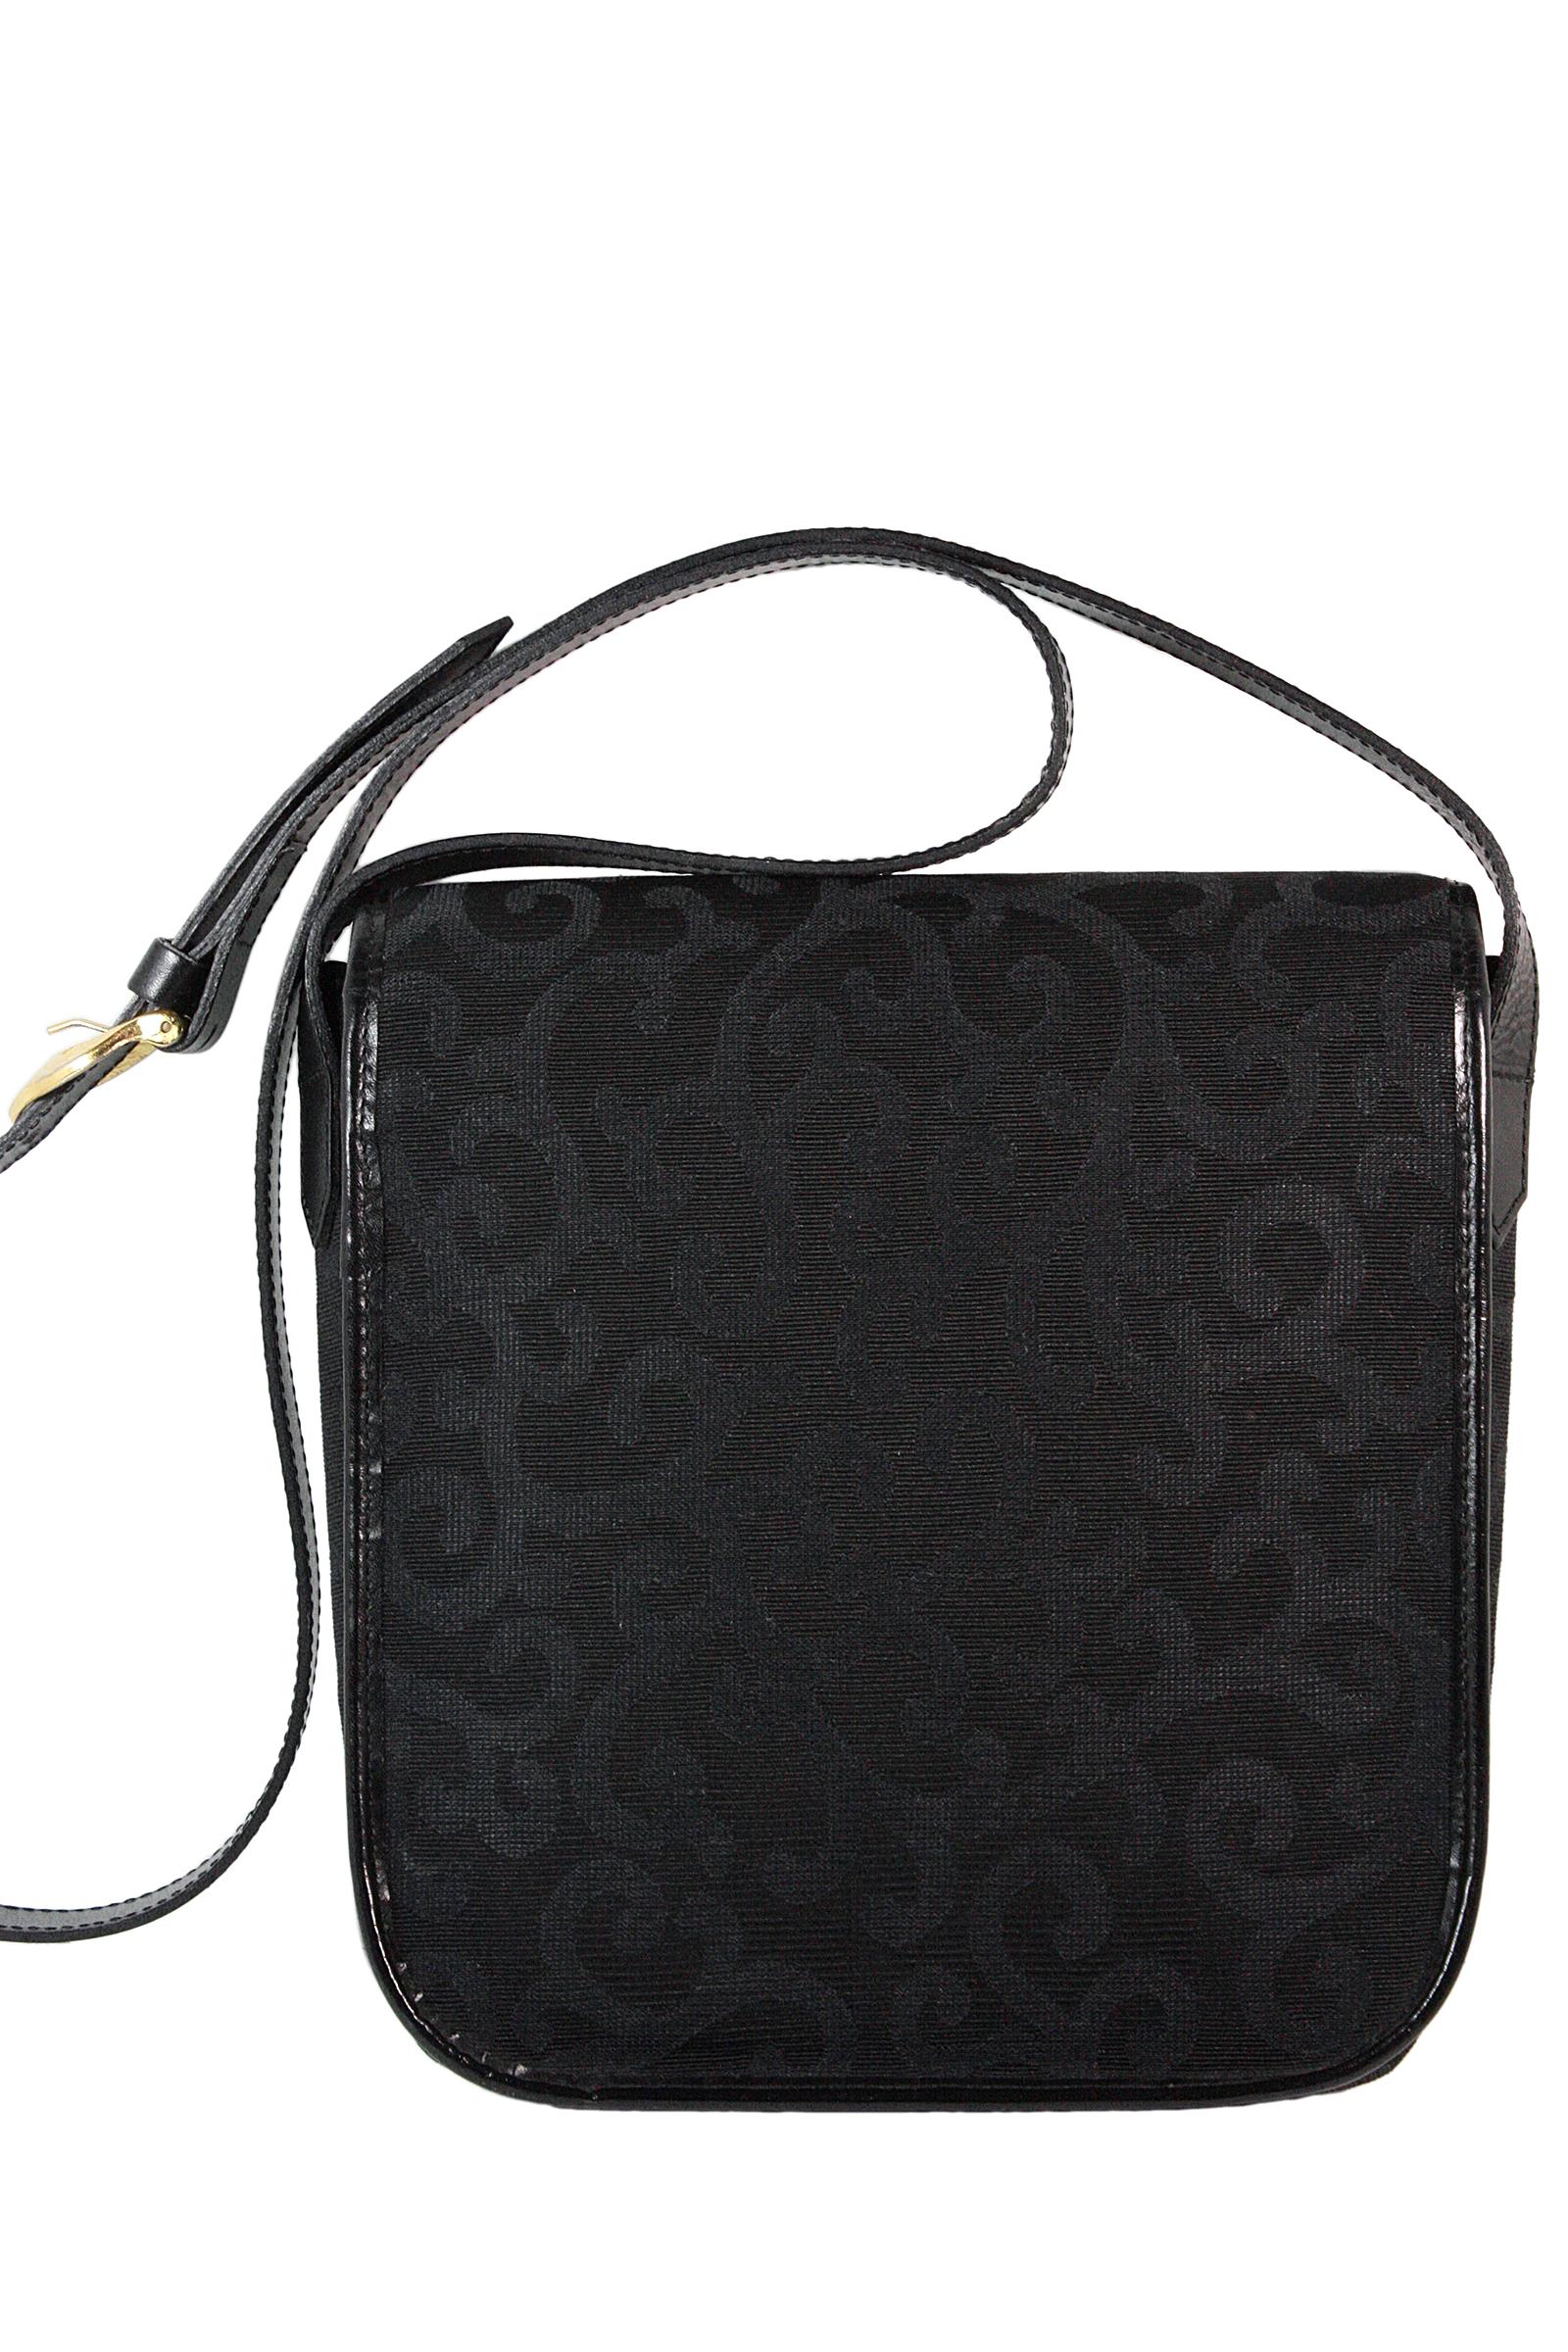 Black 1980s Yves Saint Laurent Canvas Heart Handbag